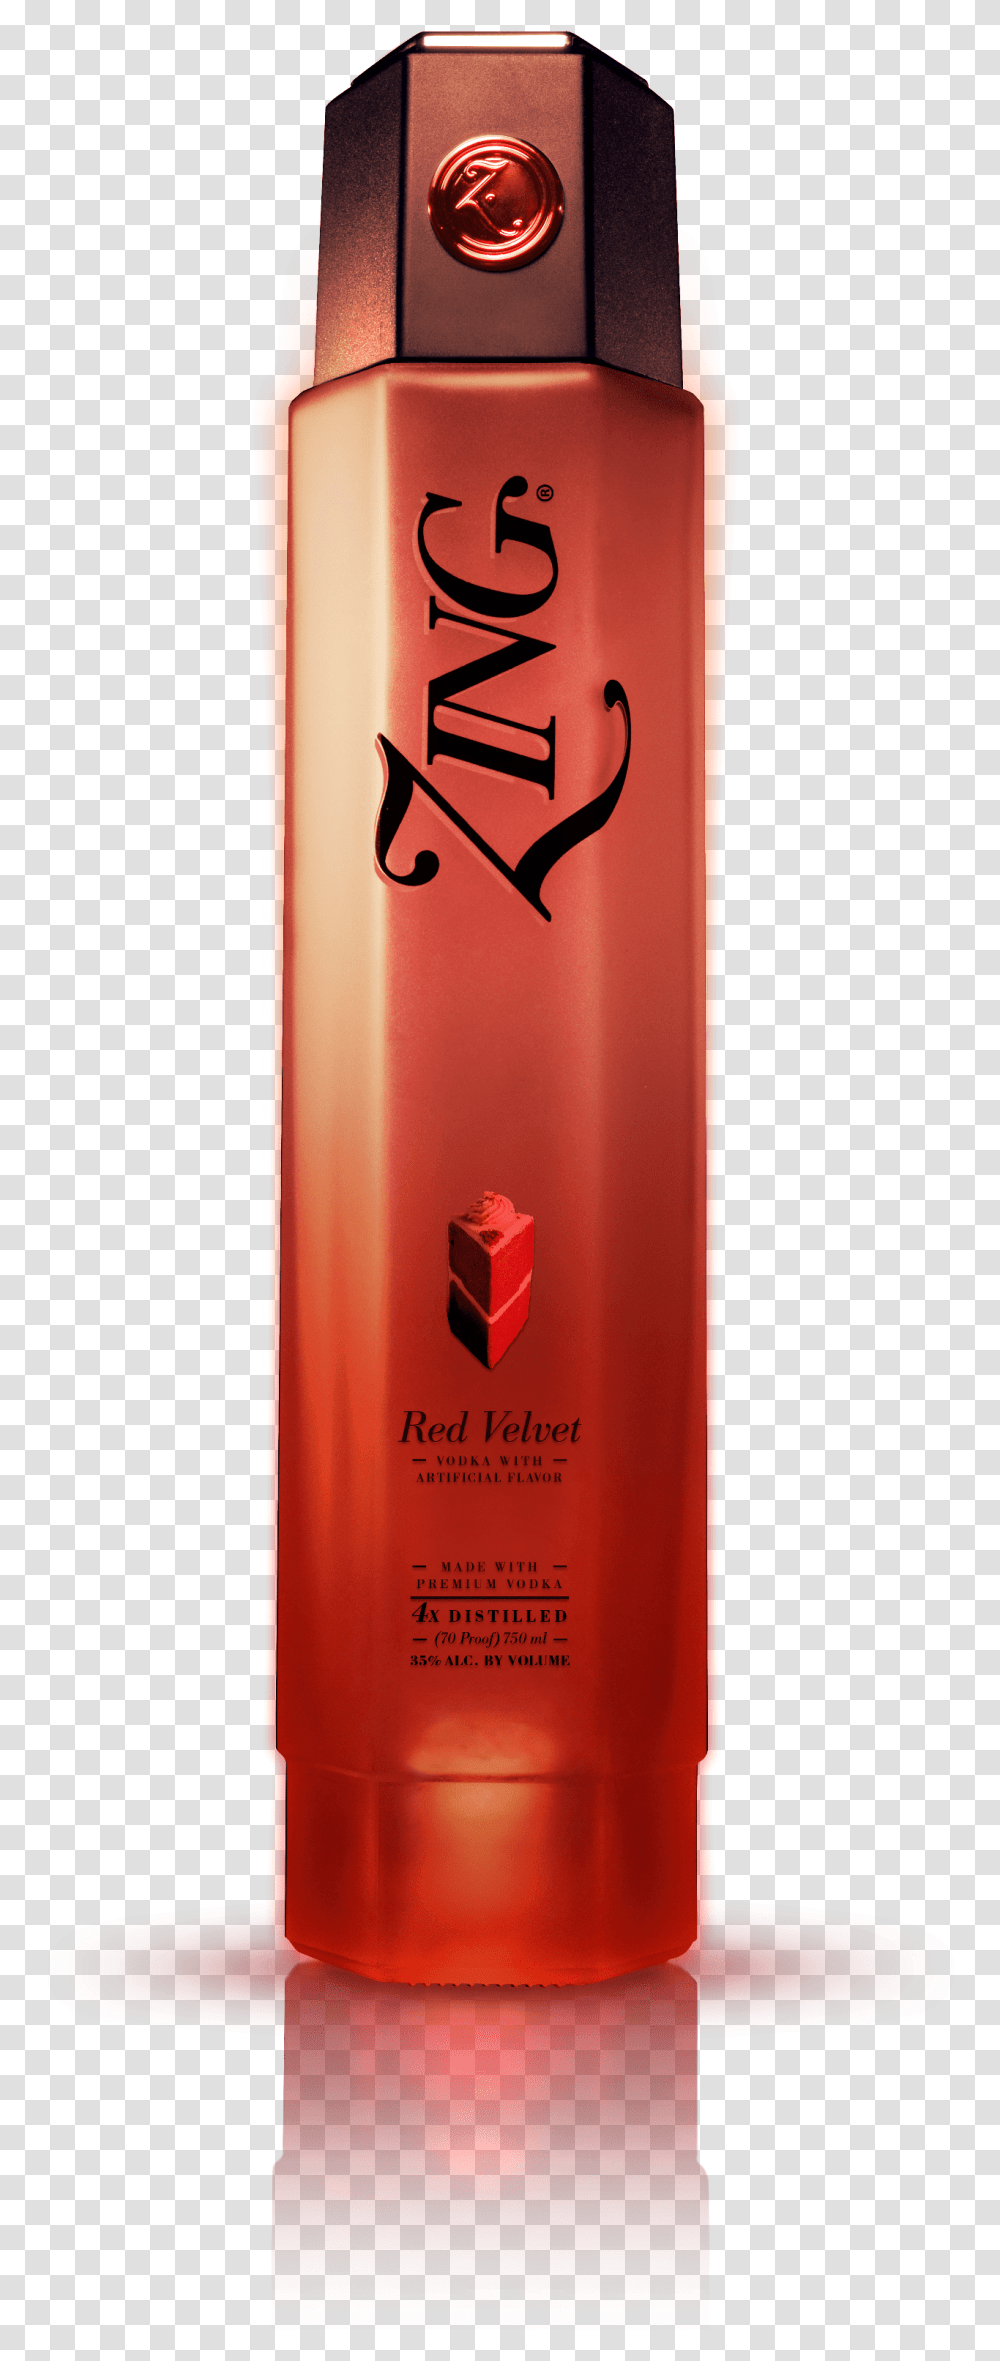 Zing Red Velvet Zing Vodka Red Velvet, Bottle, Liquor, Alcohol, Beverage Transparent Png